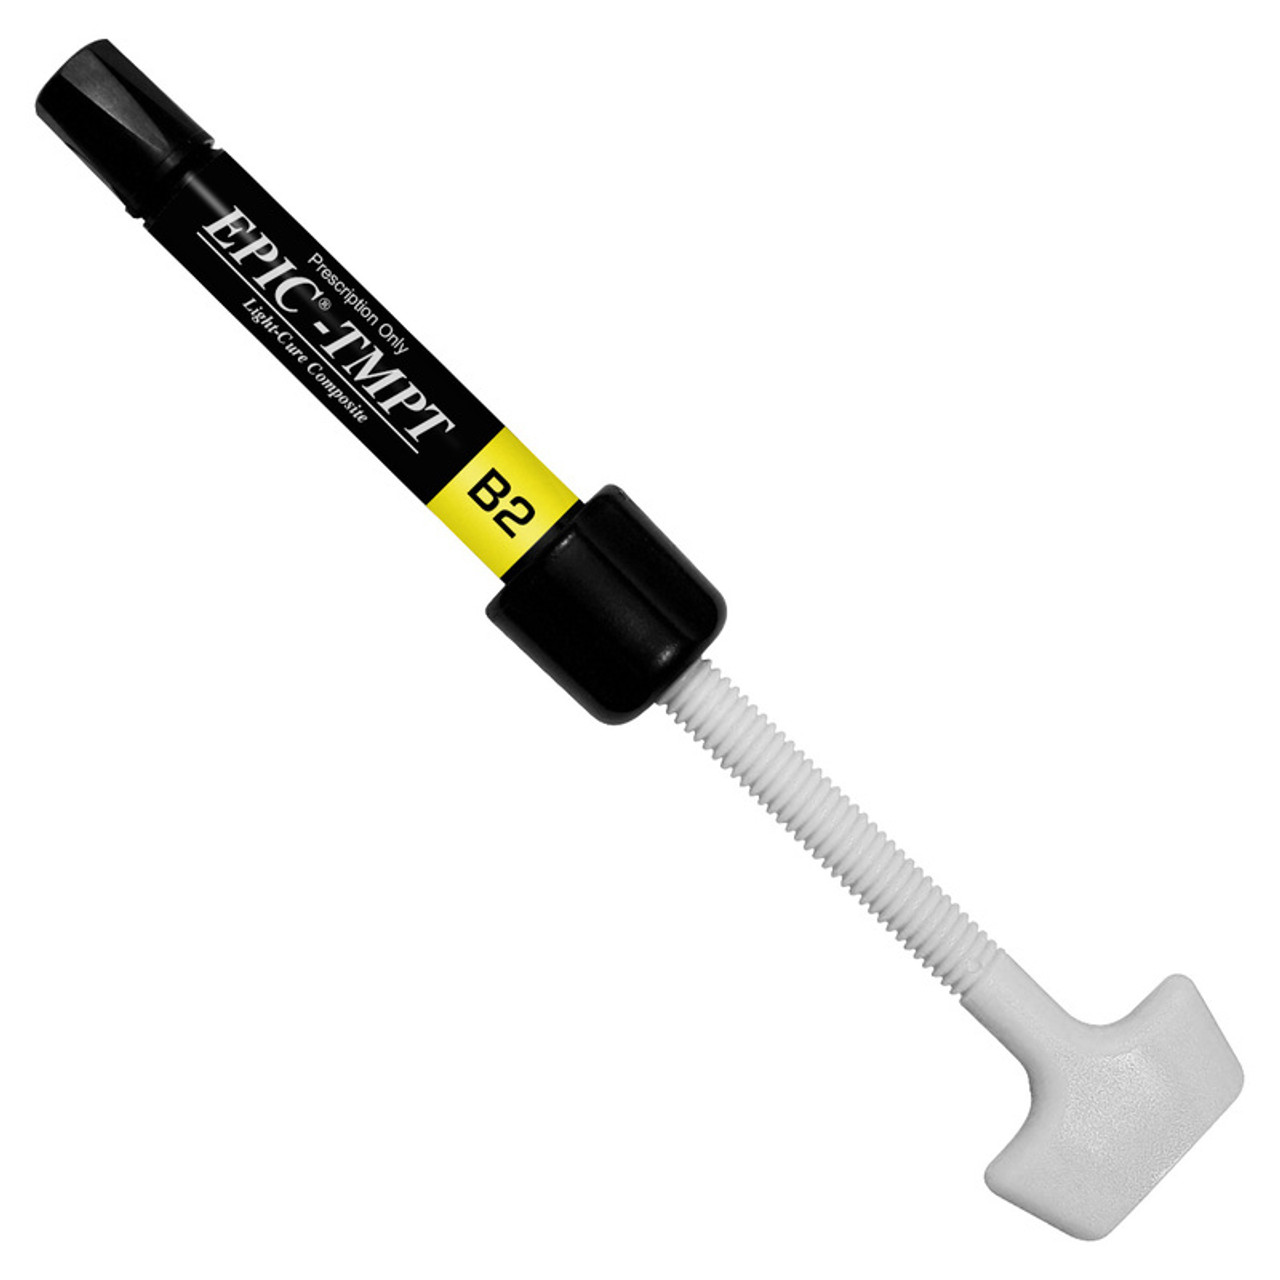 EPIC-TMPT B2 (3 gram syringe)